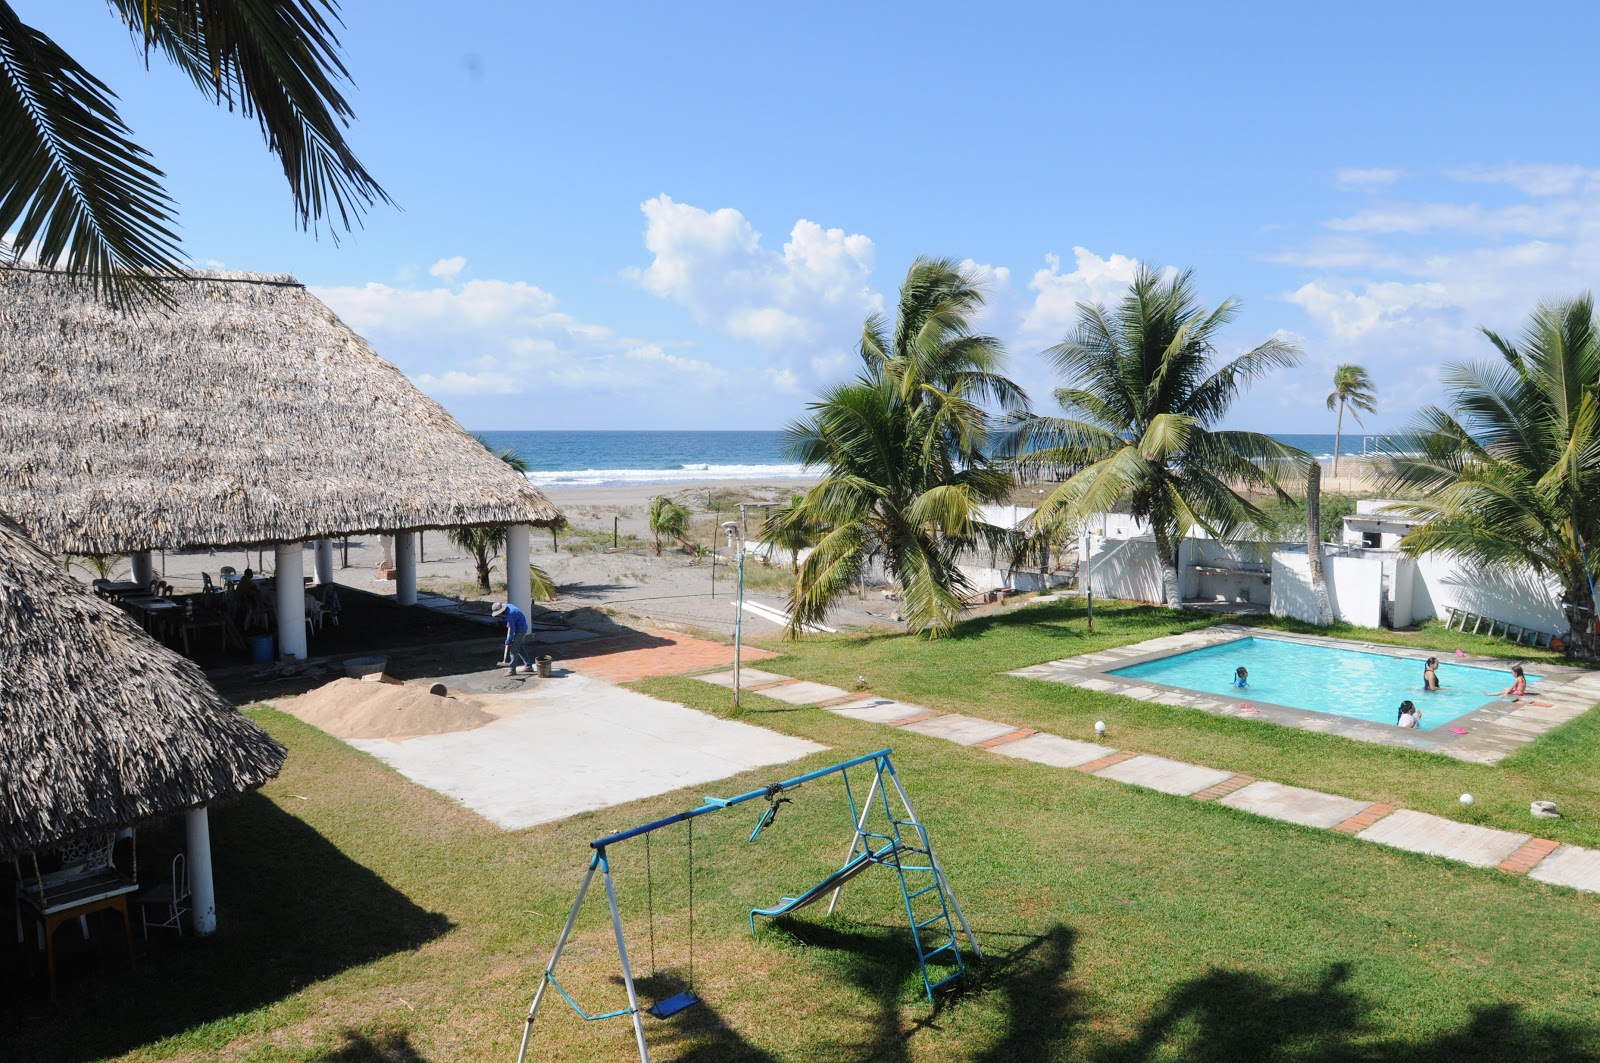 Foto af Boca Del Cielo beach faciliteter område